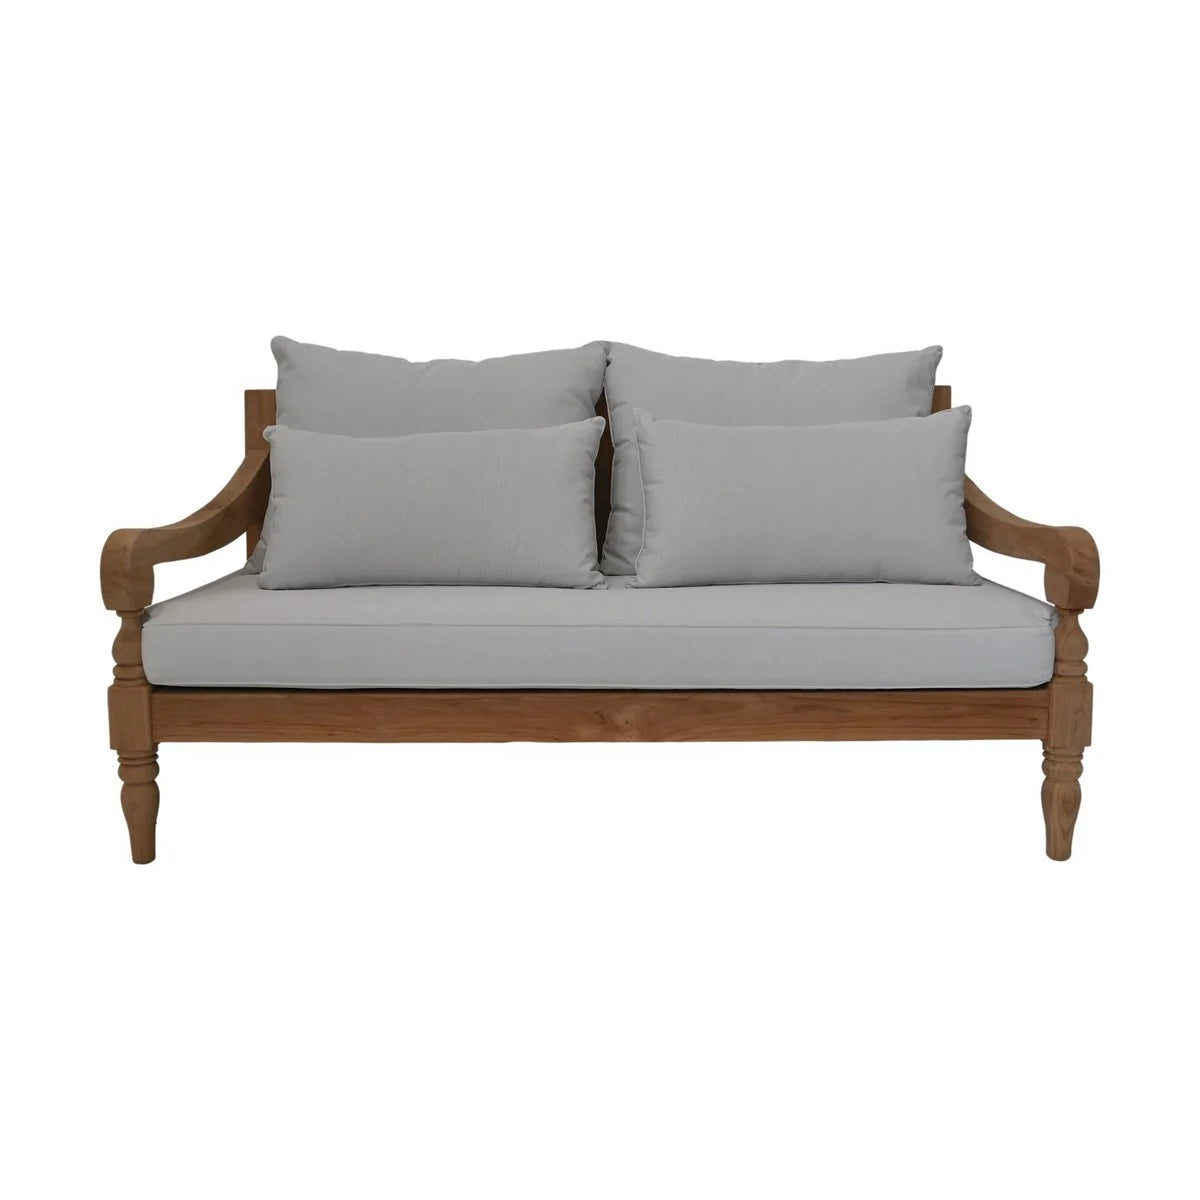 Bahama 2.5 seater sofa incl cushion - 150x95x80 - Natural/White - teak